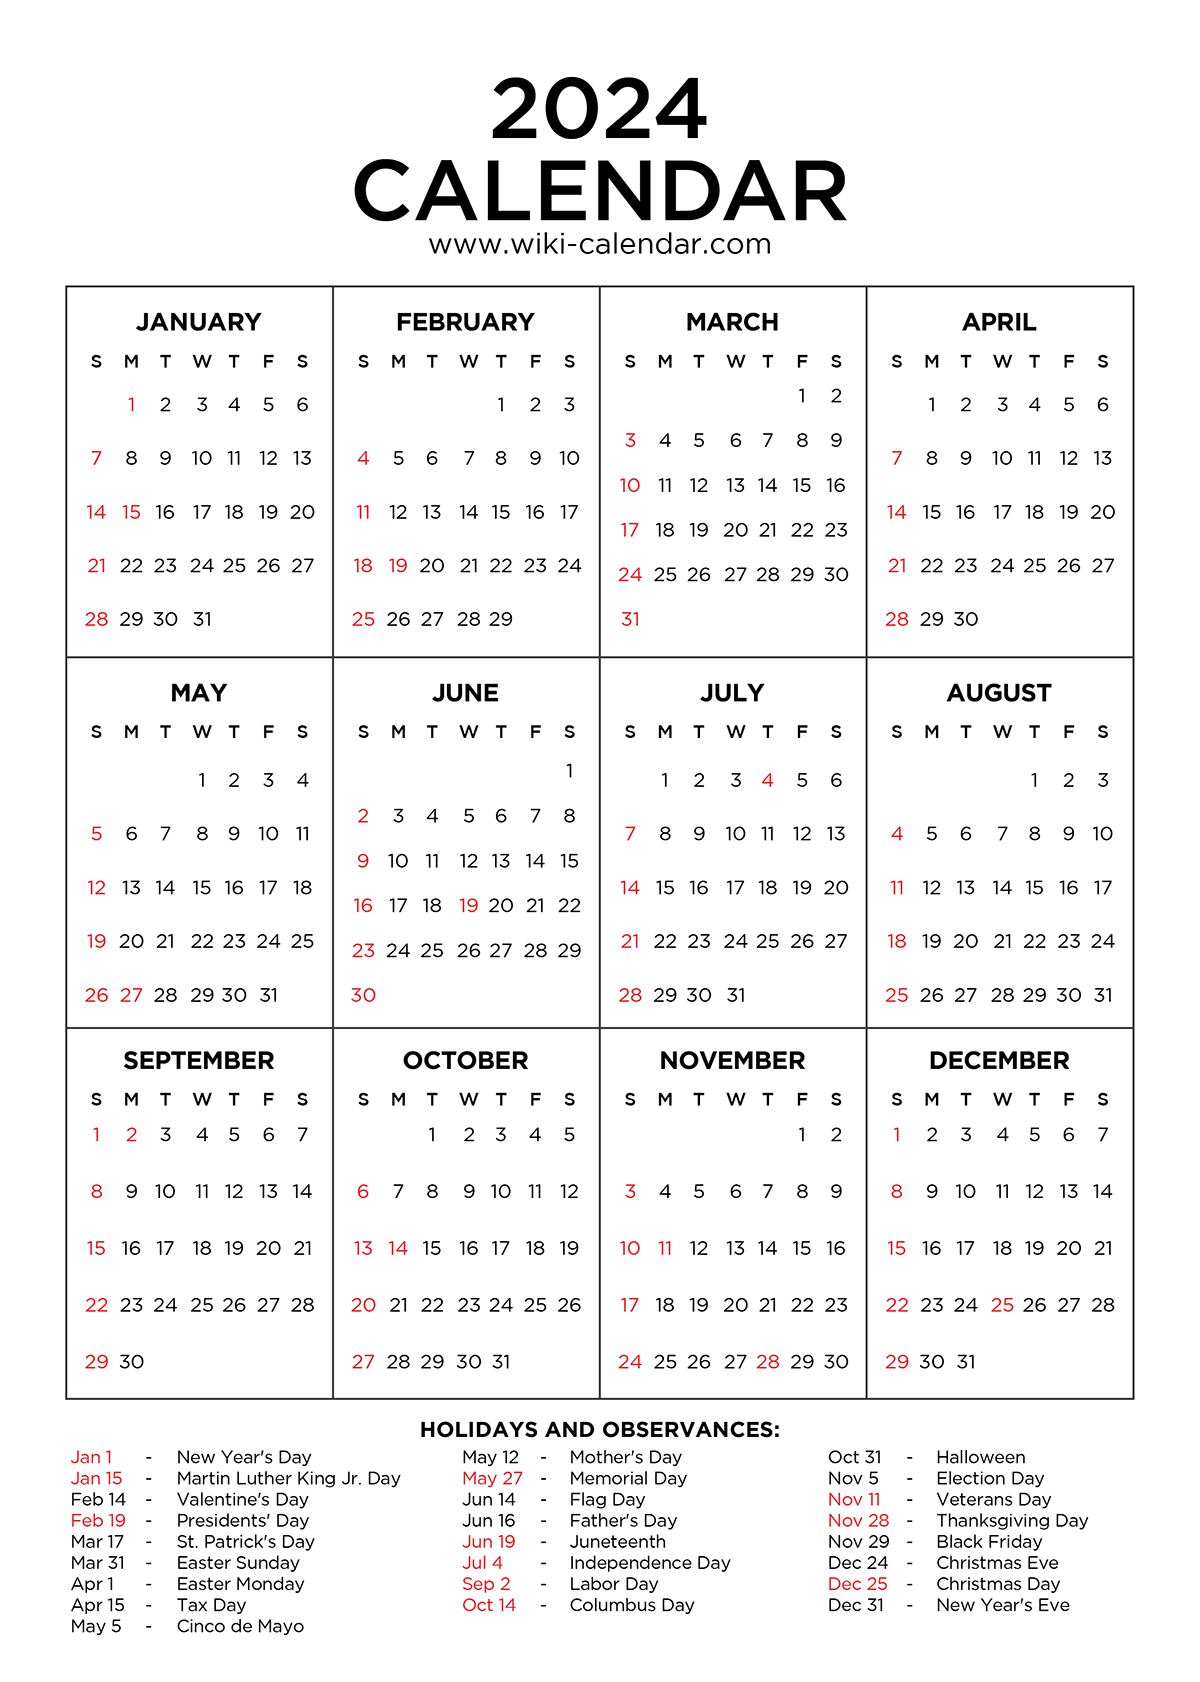 Year 2024 Calendar Printable With Holidays - Wiki Calendar | Printable Calendar 2024 Full Year